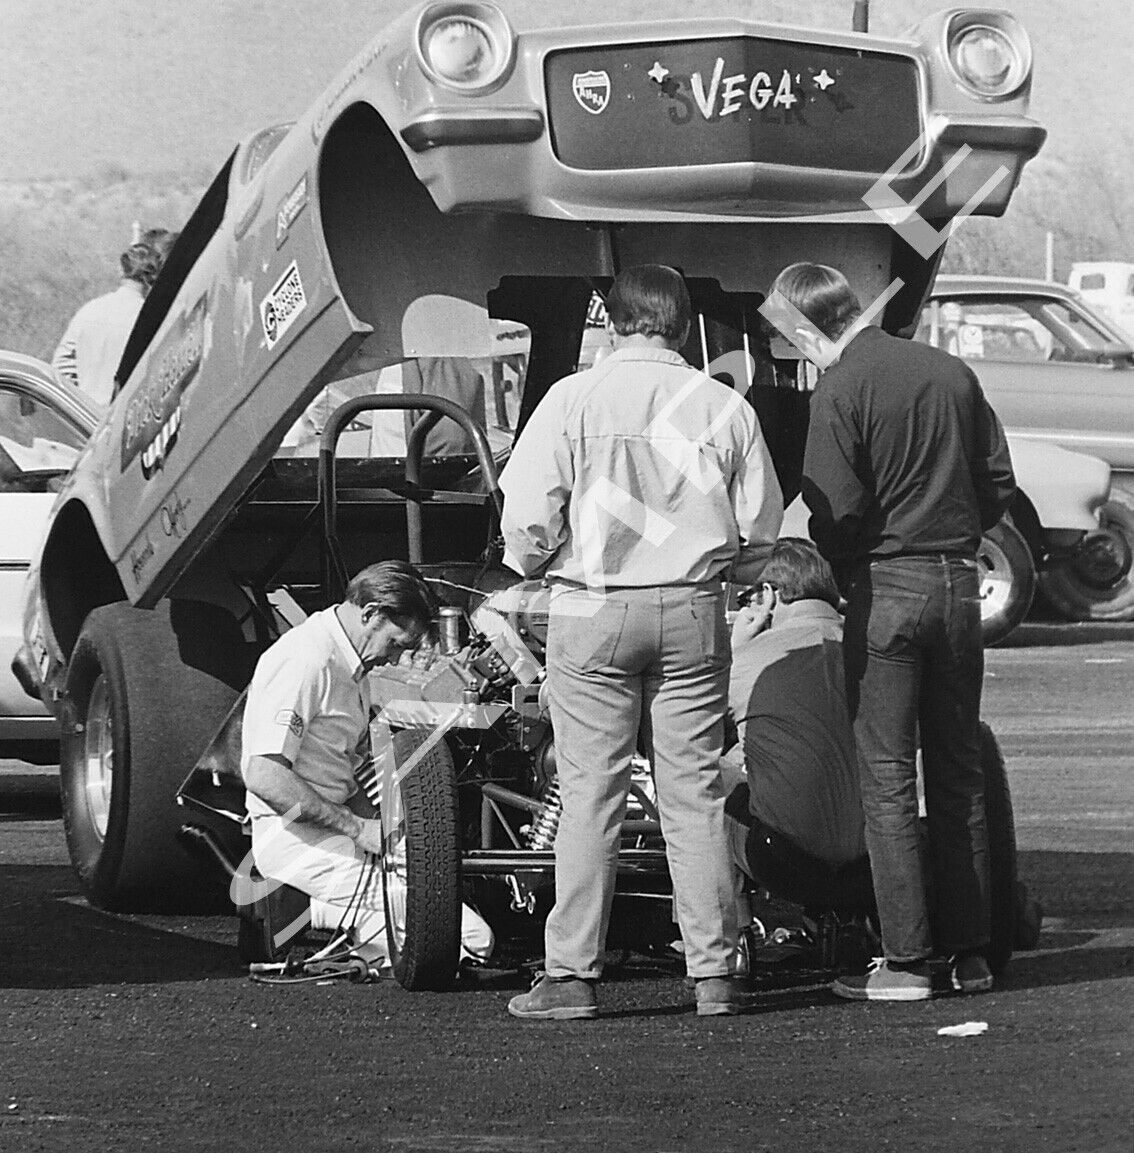 8 x 10" B&W Photo Of Dickie Harrell Working On His Vega Funny Car